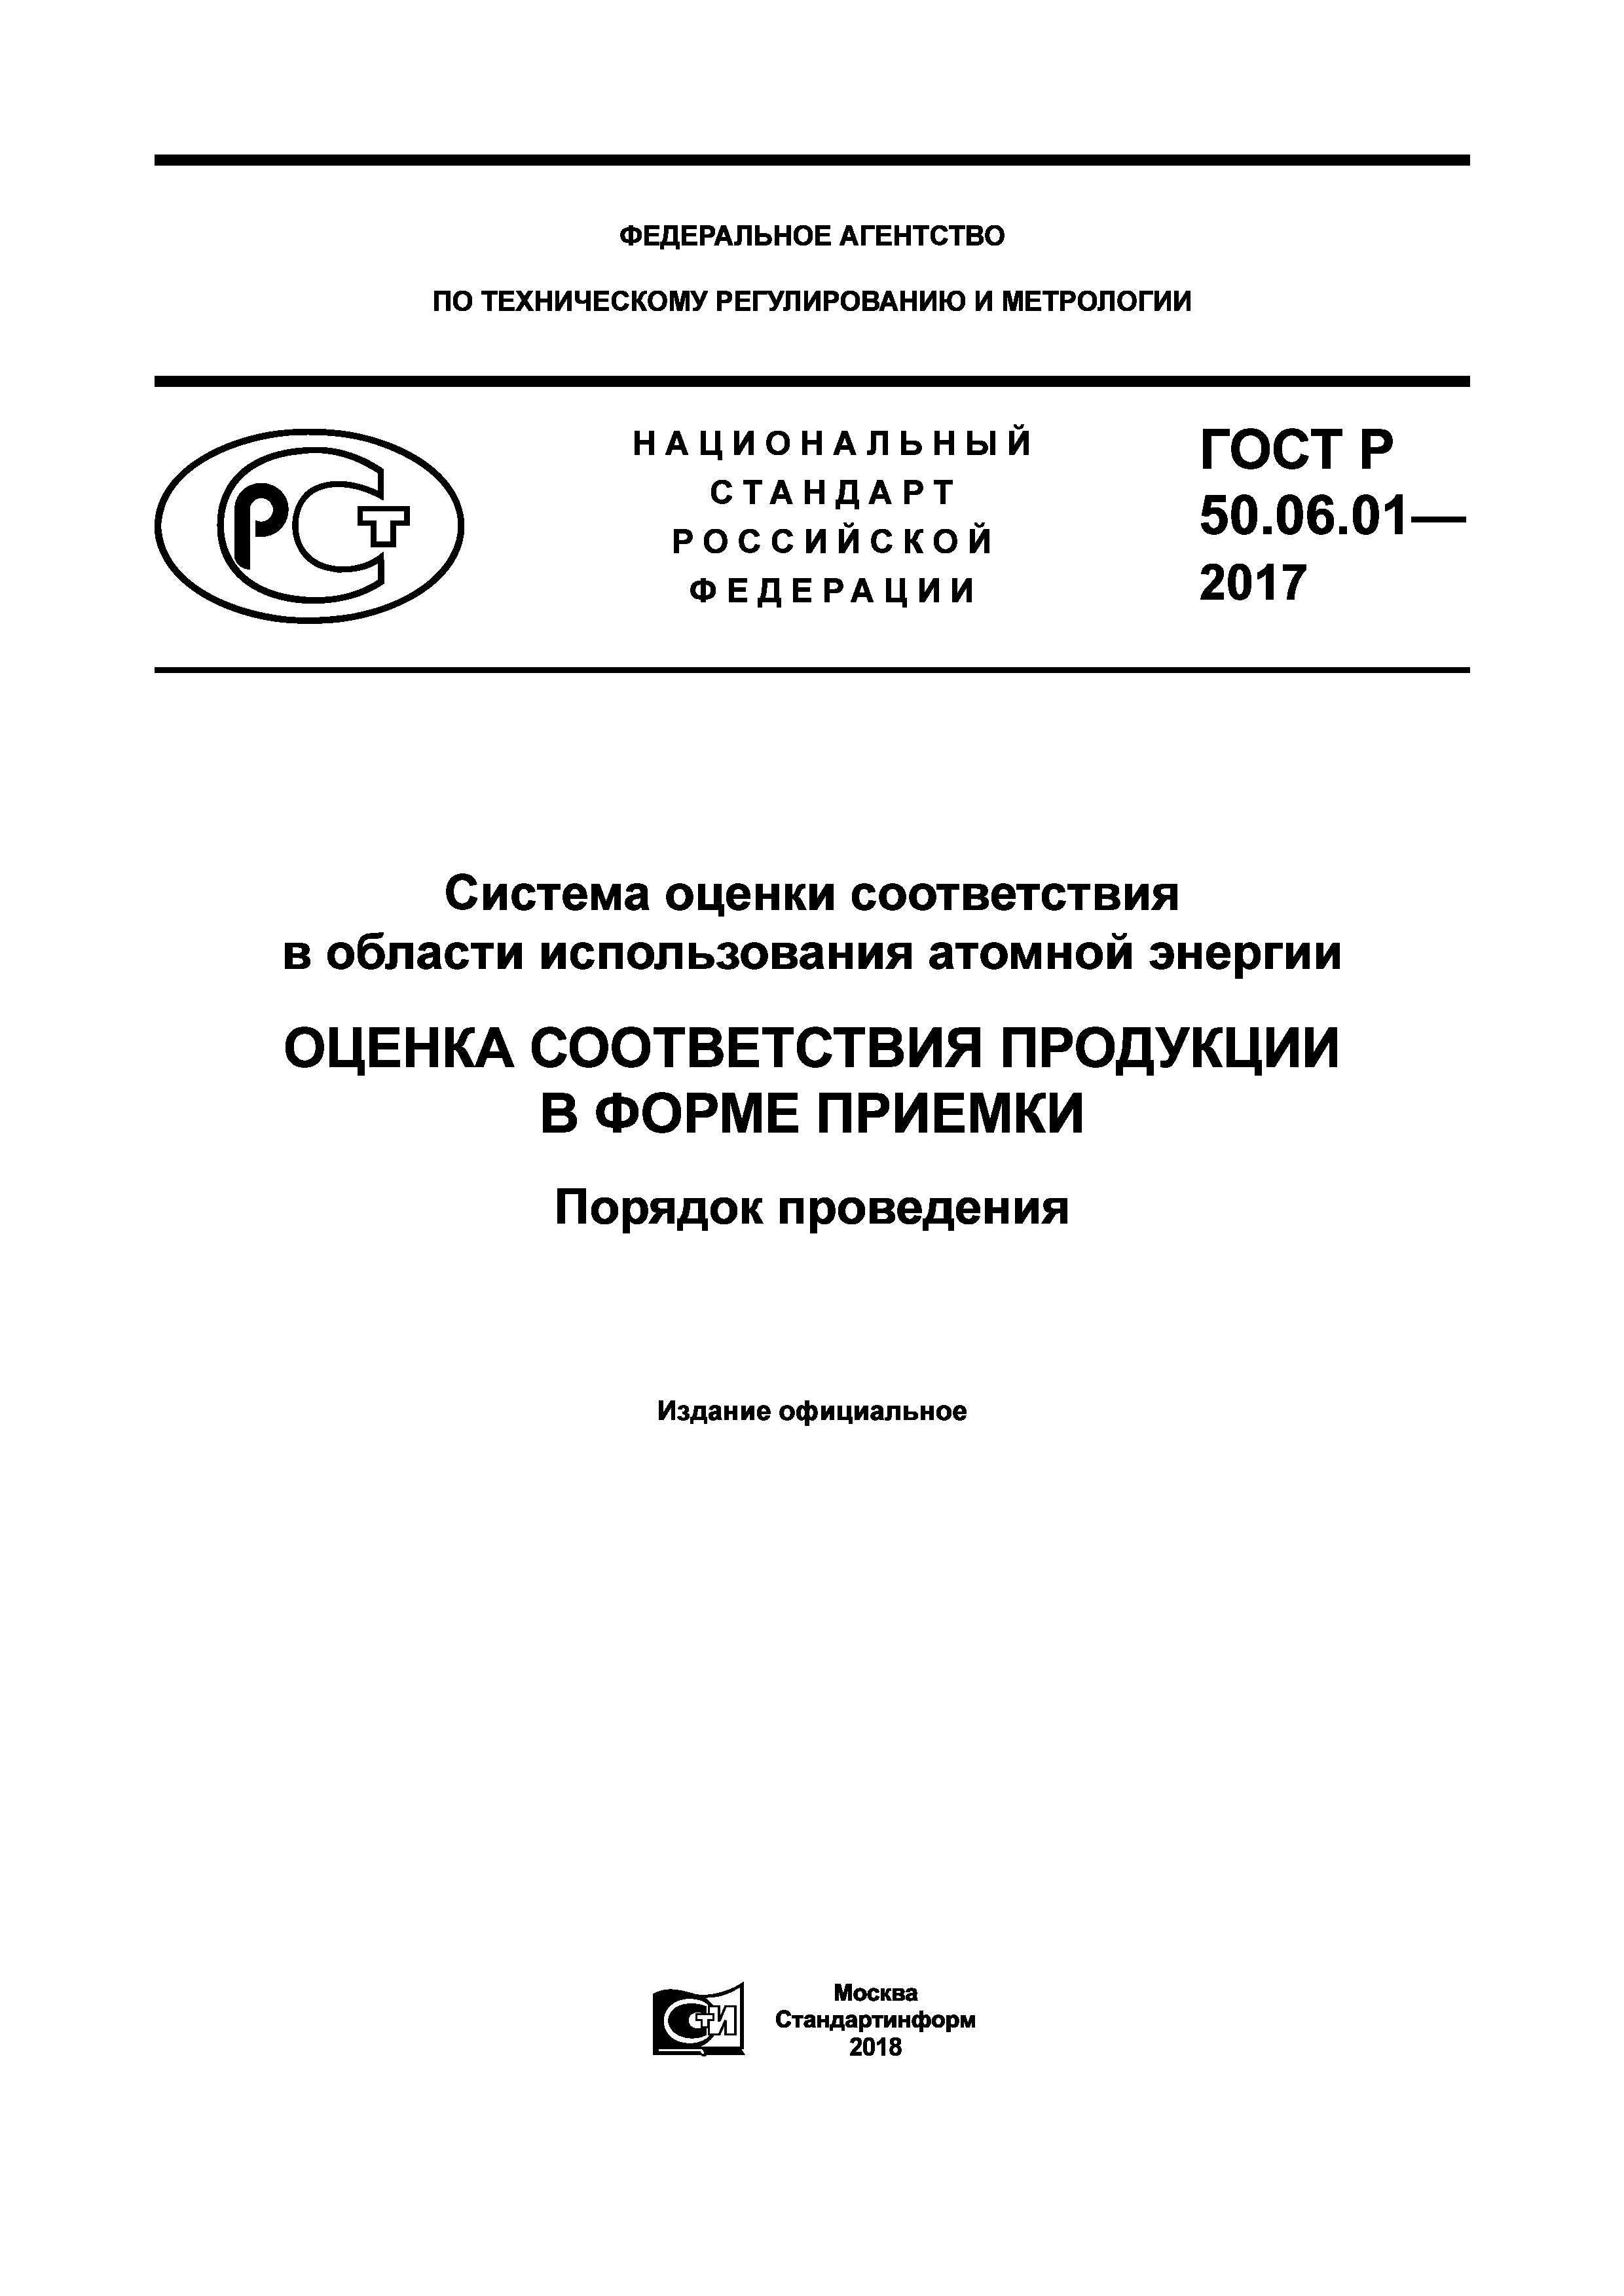 ГОСТ Р 50.06.01-2017